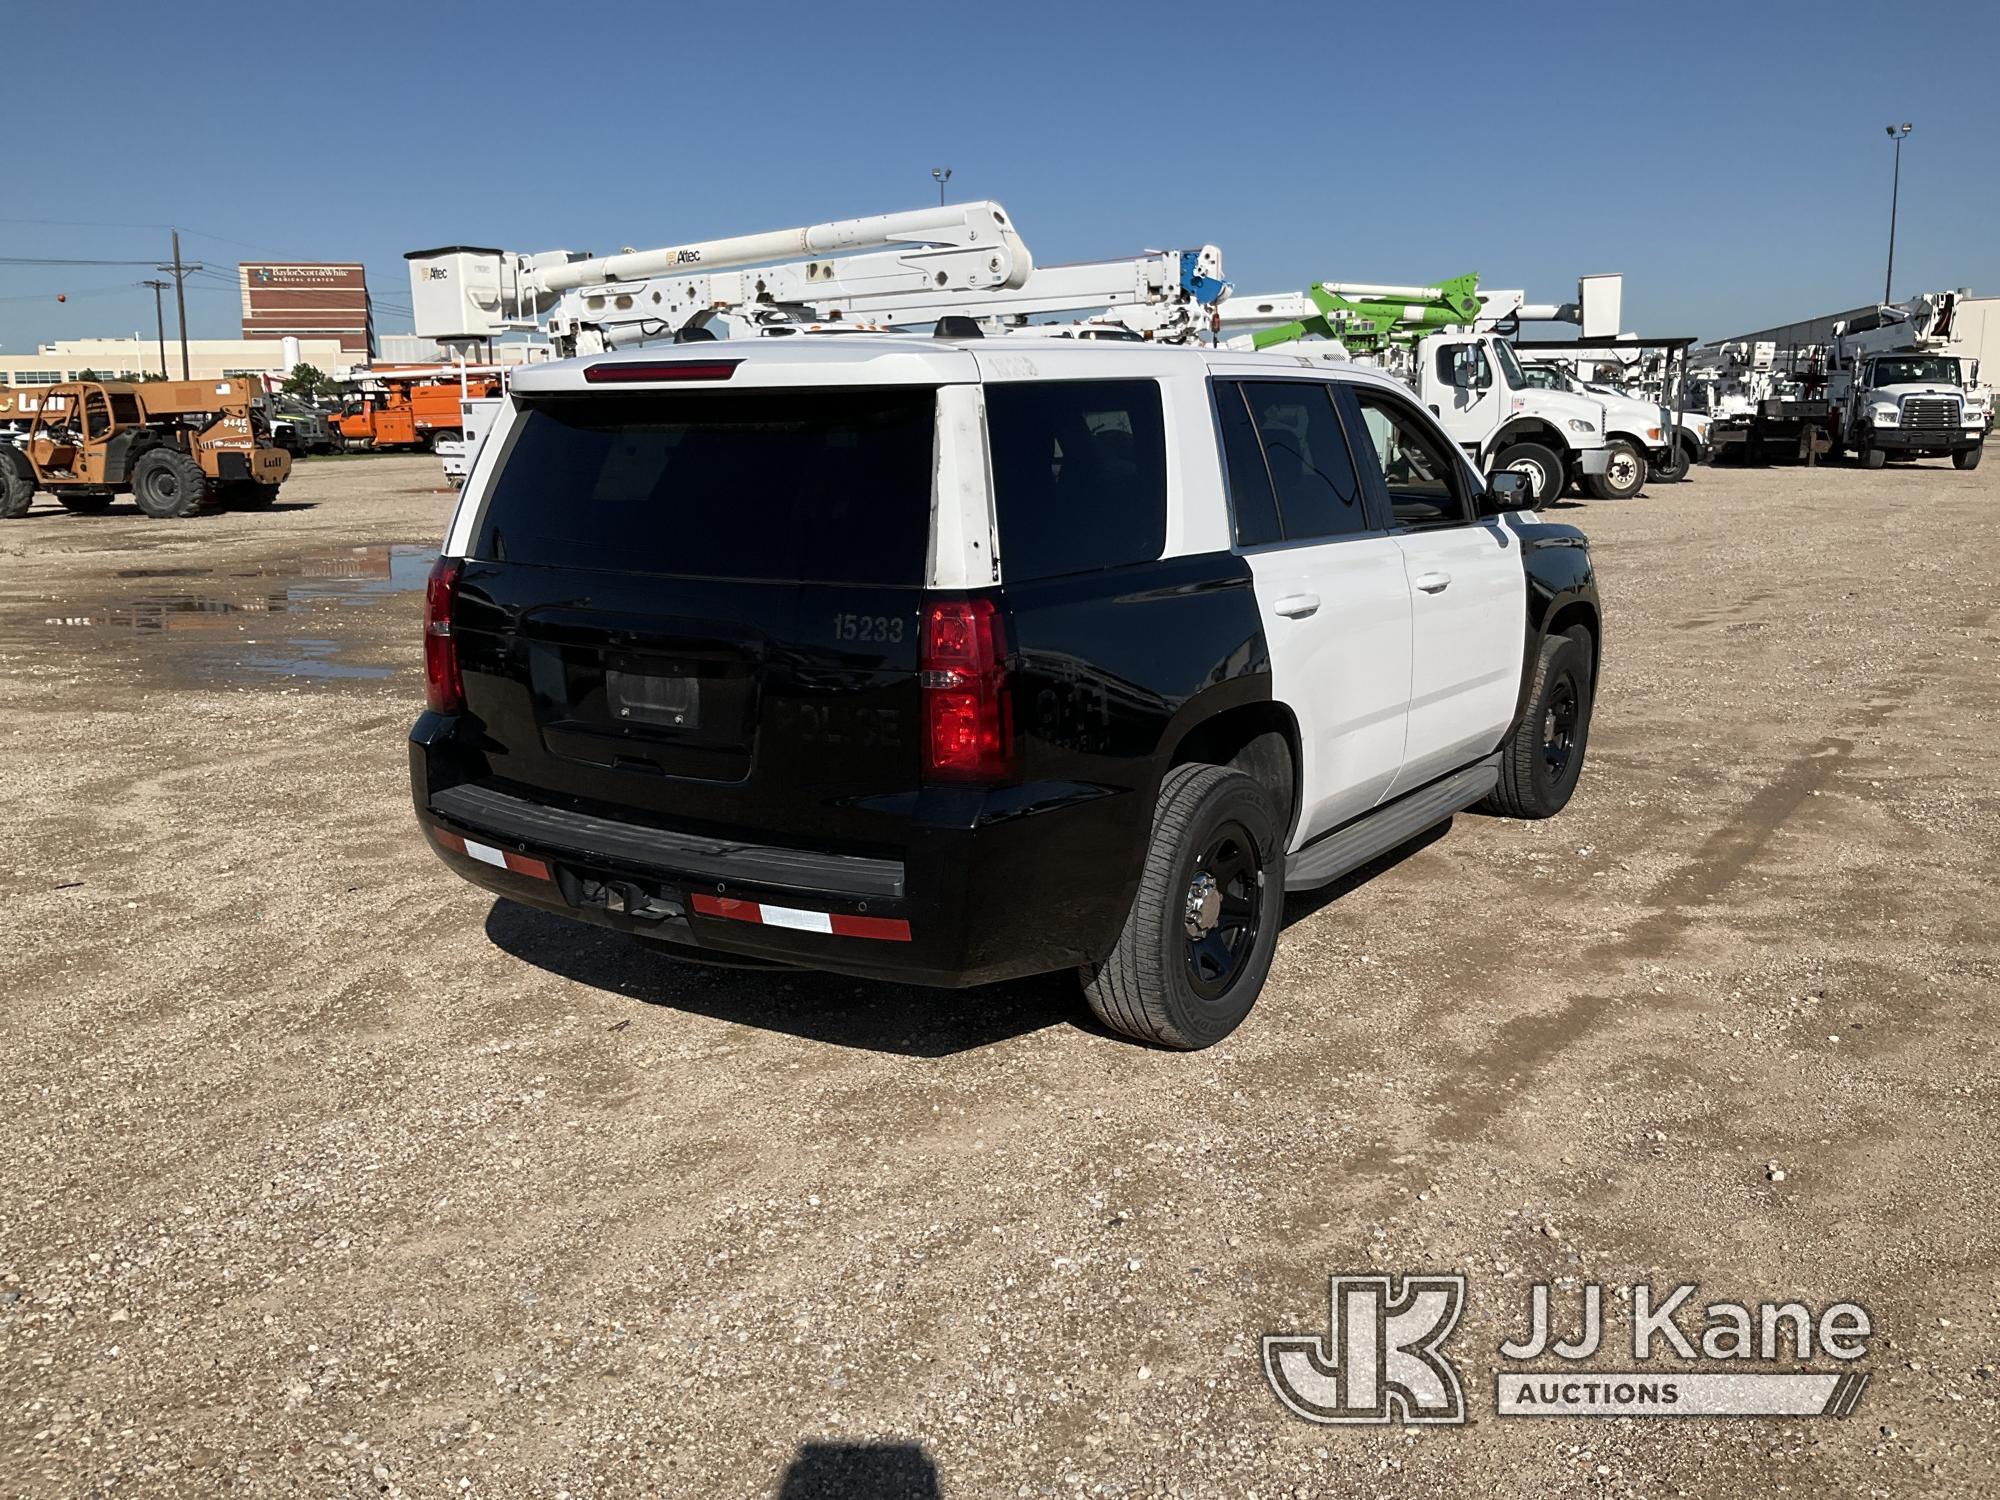 (Waxahachie, TX) 2015 Chevrolet Tahoe Police Package 4-Door Sport Utility Vehicle, City of Plano Own